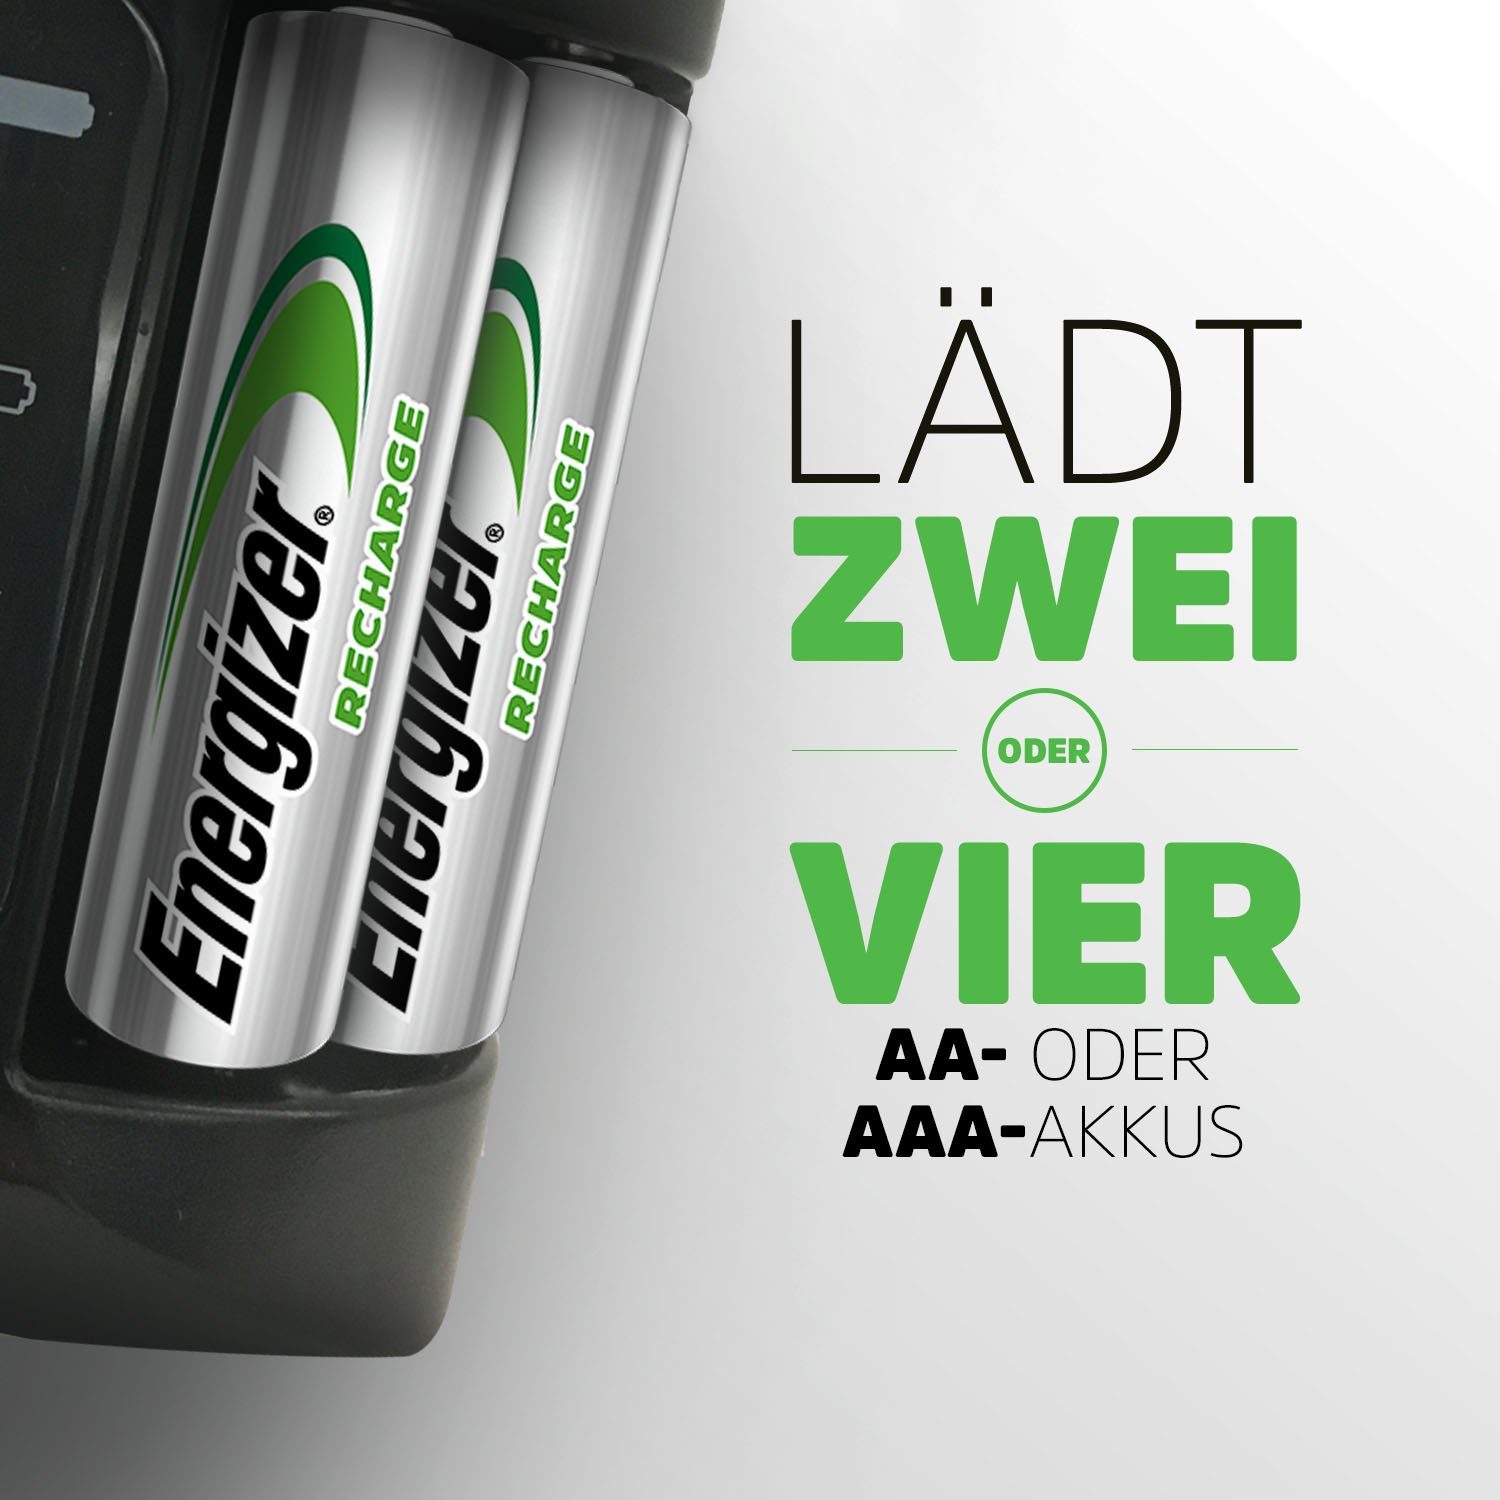 Energizer Pro Charger +4 AA 2000 mAh Batterie-Ladegerät